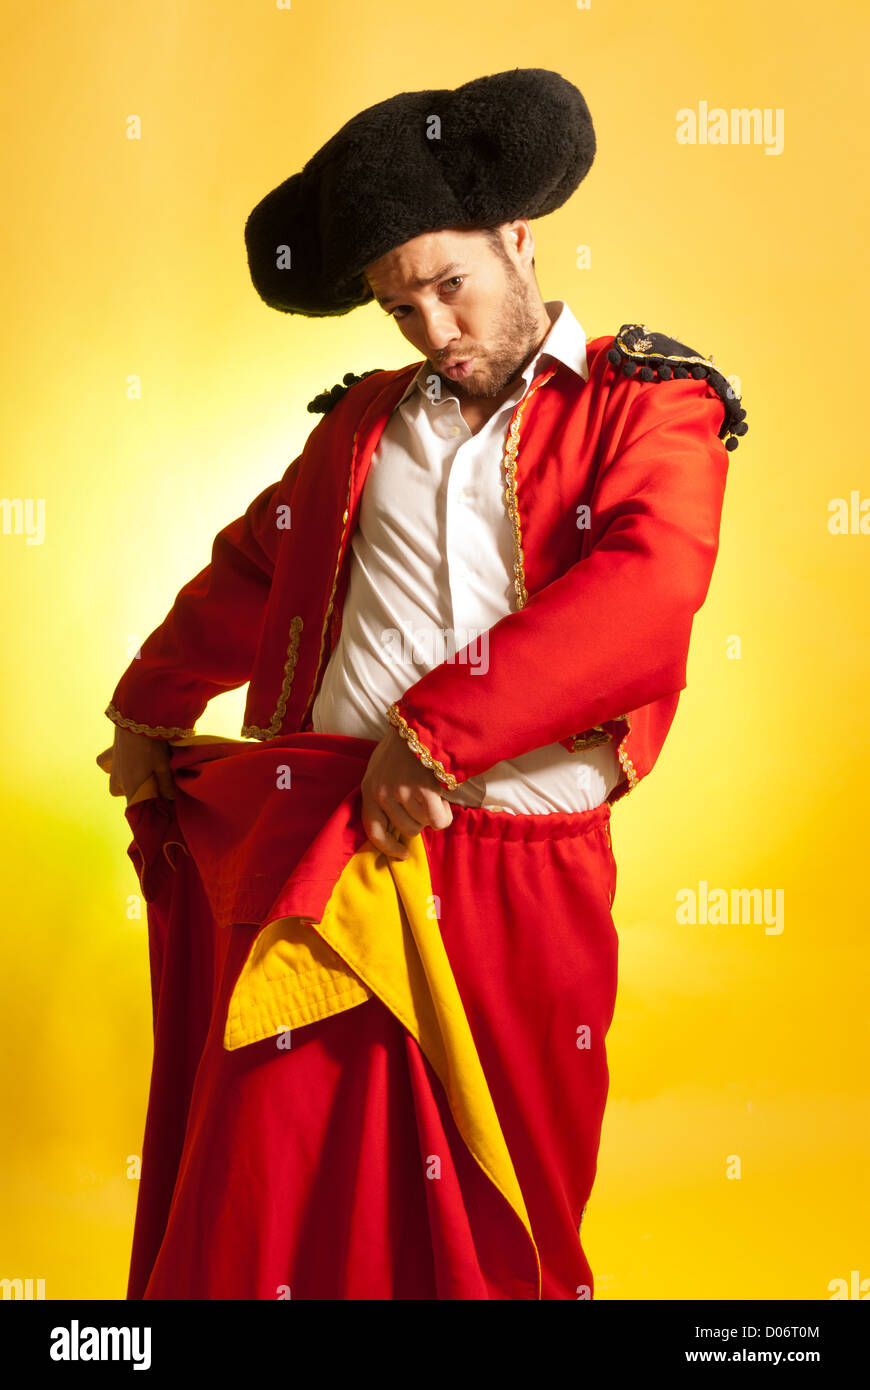 Bullfighter courage red yellow humor spanish colors Stock Photo